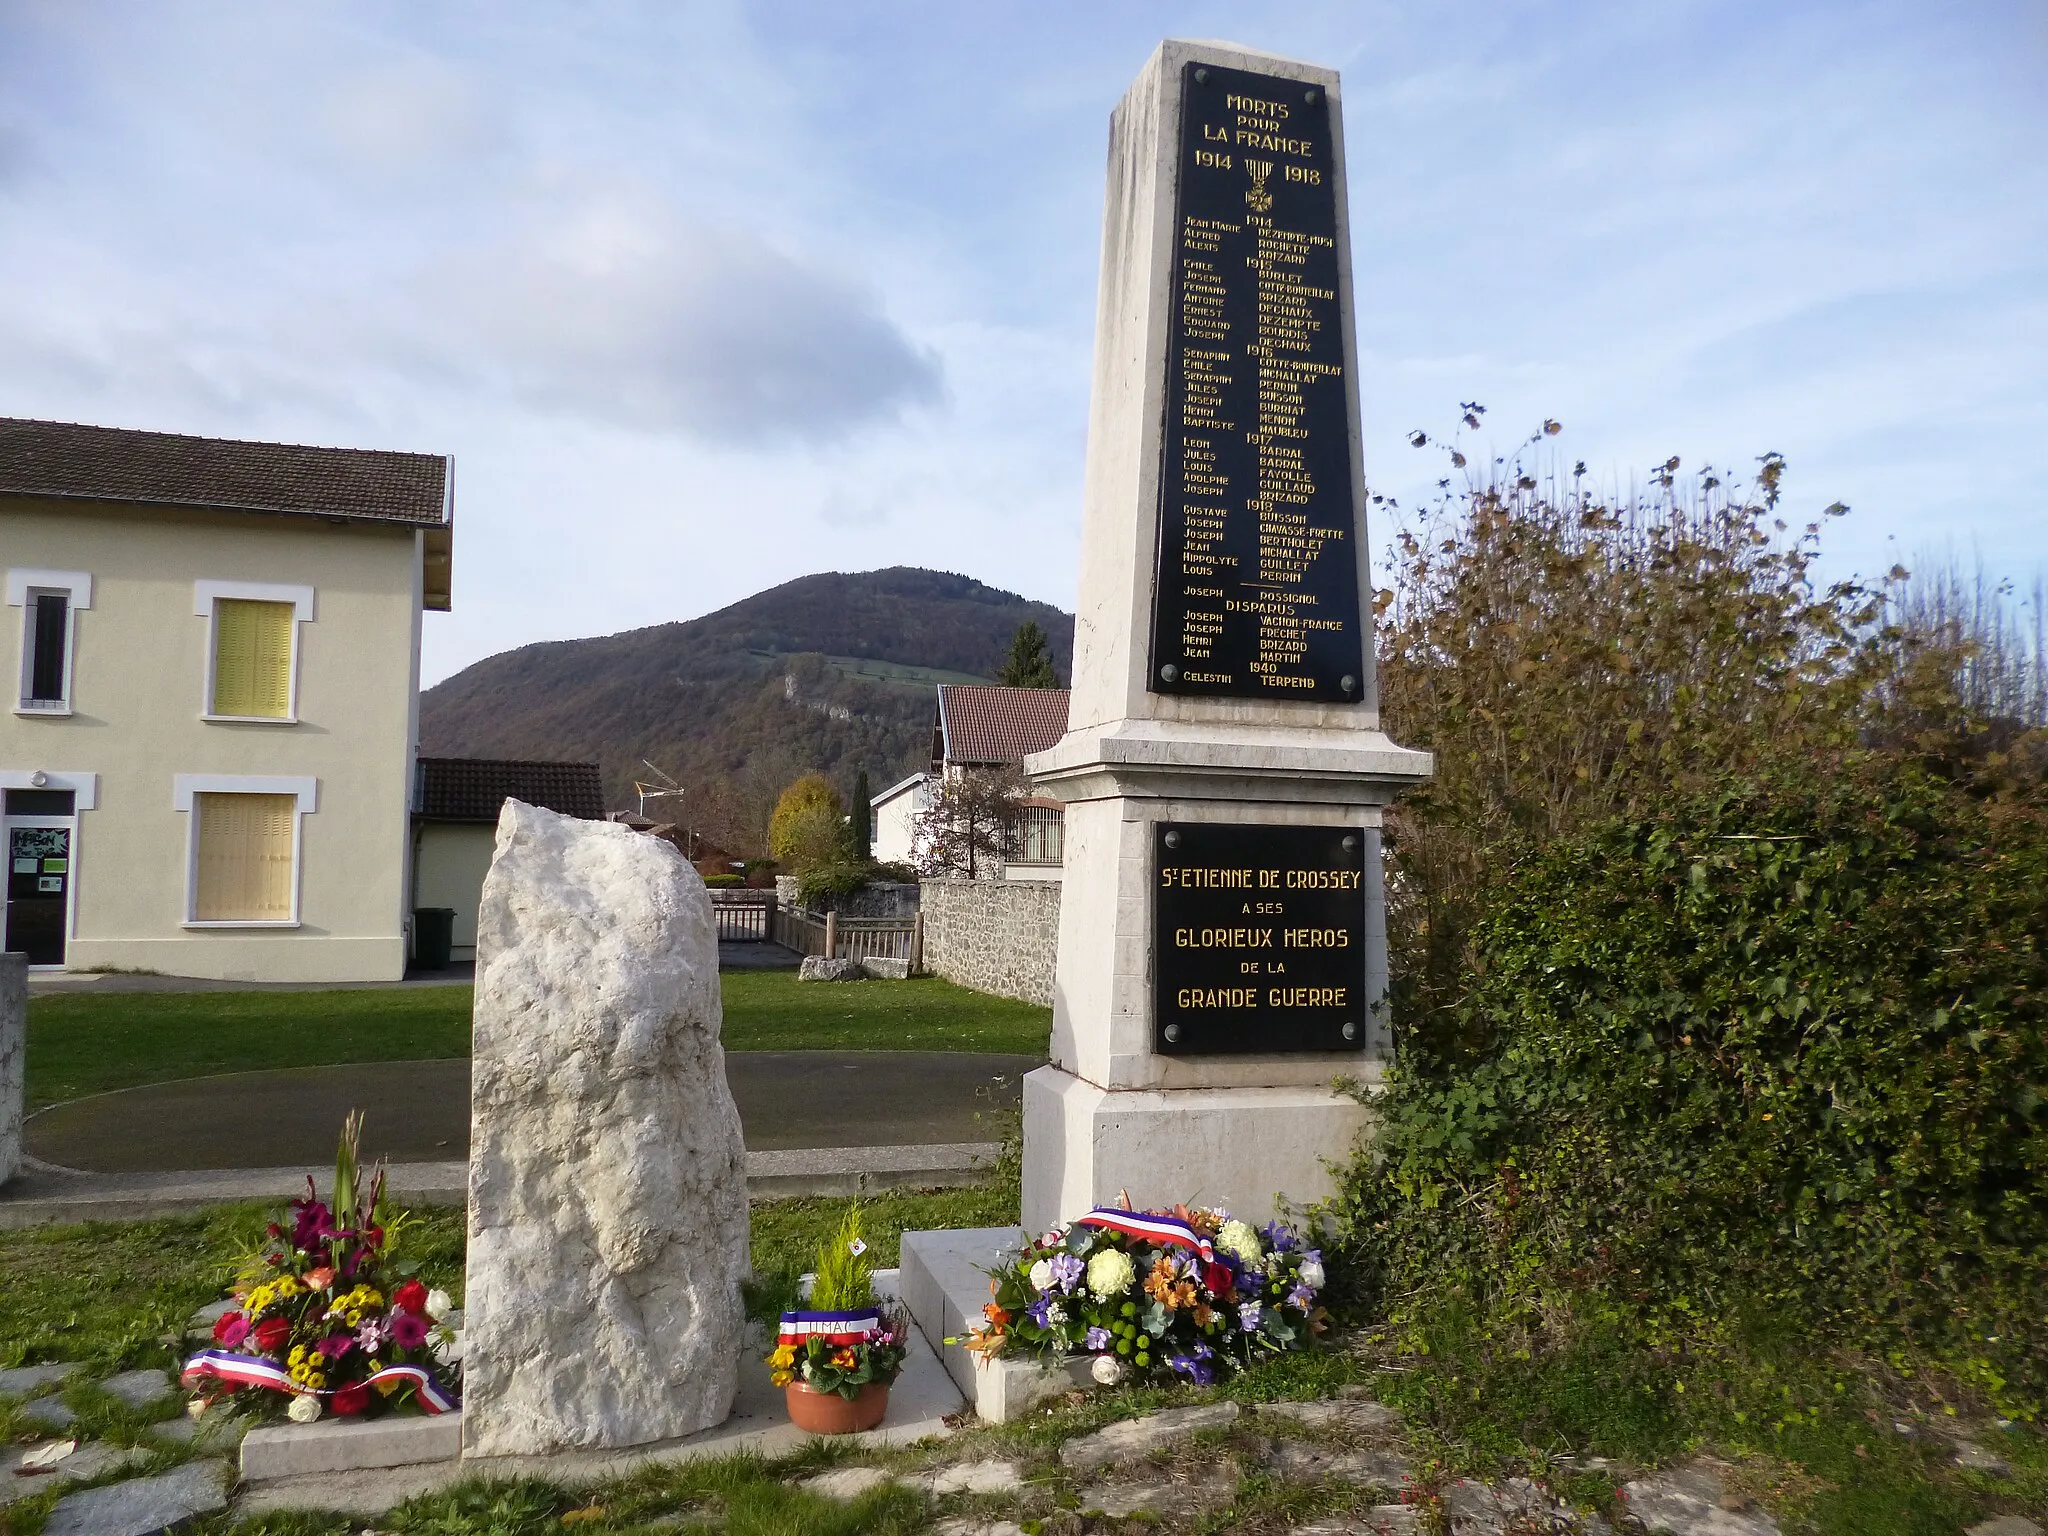 Photo showing: War Memorial (WW1 and WW2)
Saint-Etienne-de-Crossey
Isère, France

November 2016